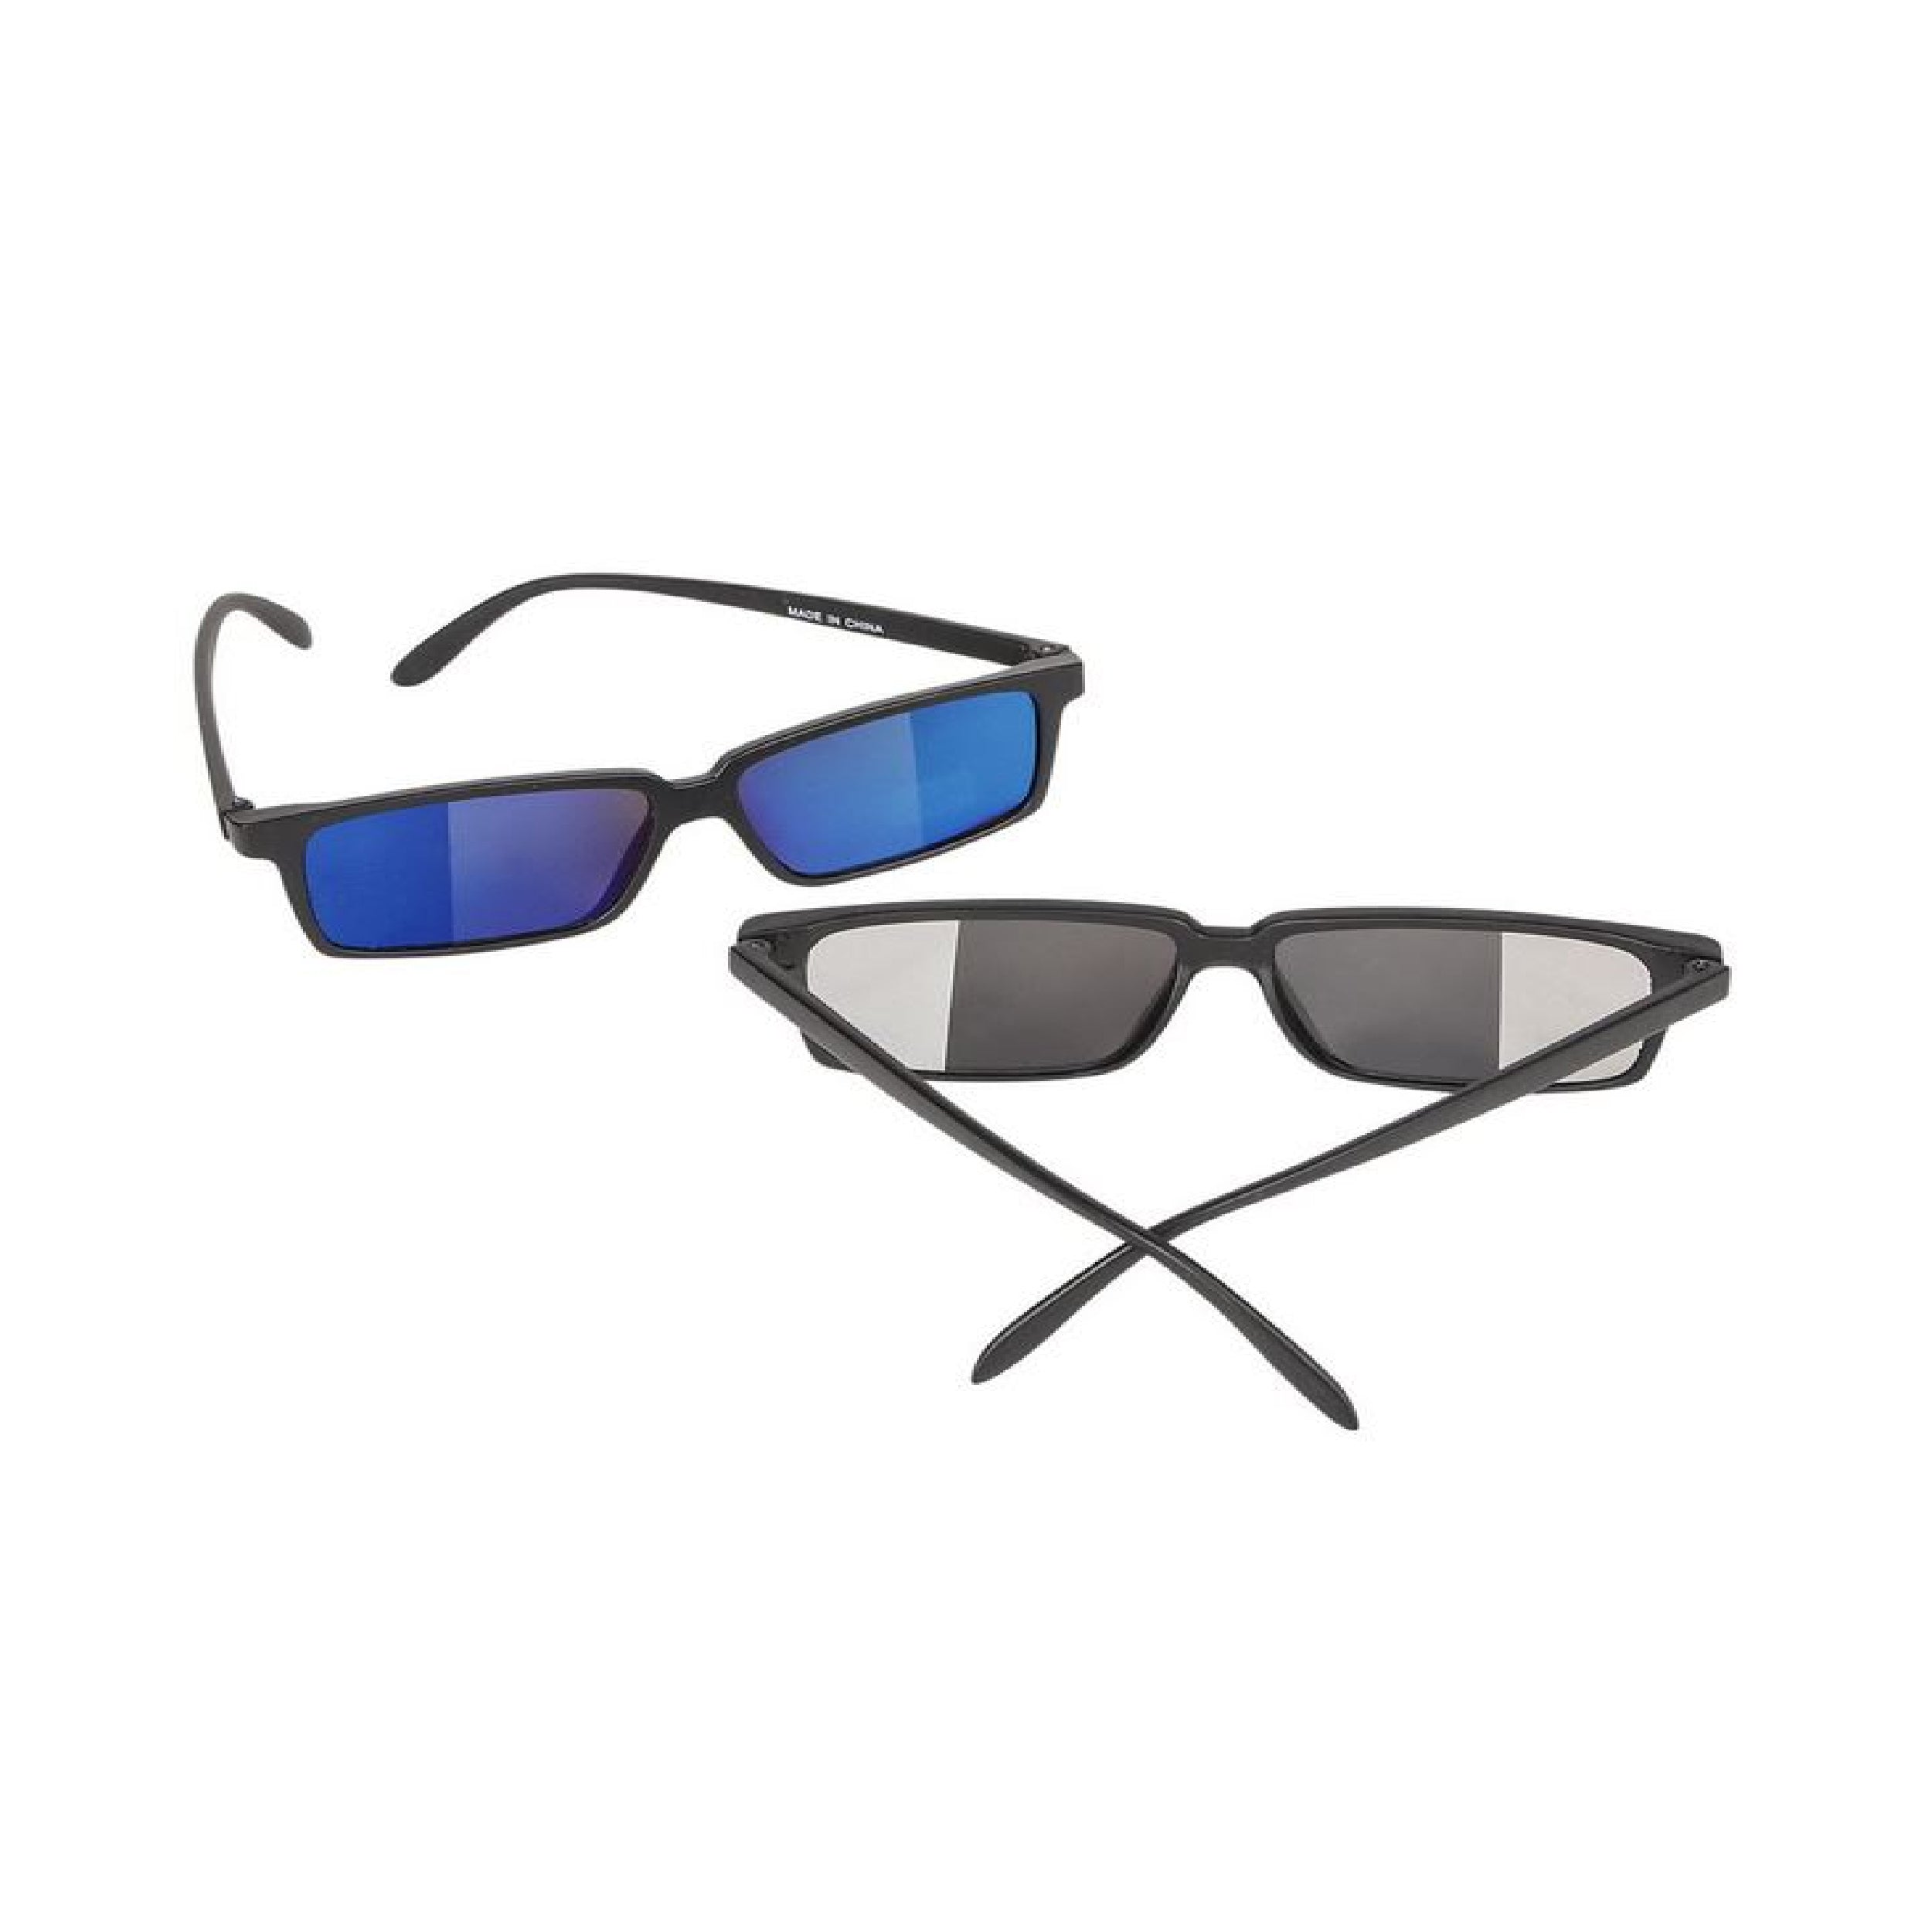 Spy Look Behind Sunglasses kids toys (1 dozen=$32.99)